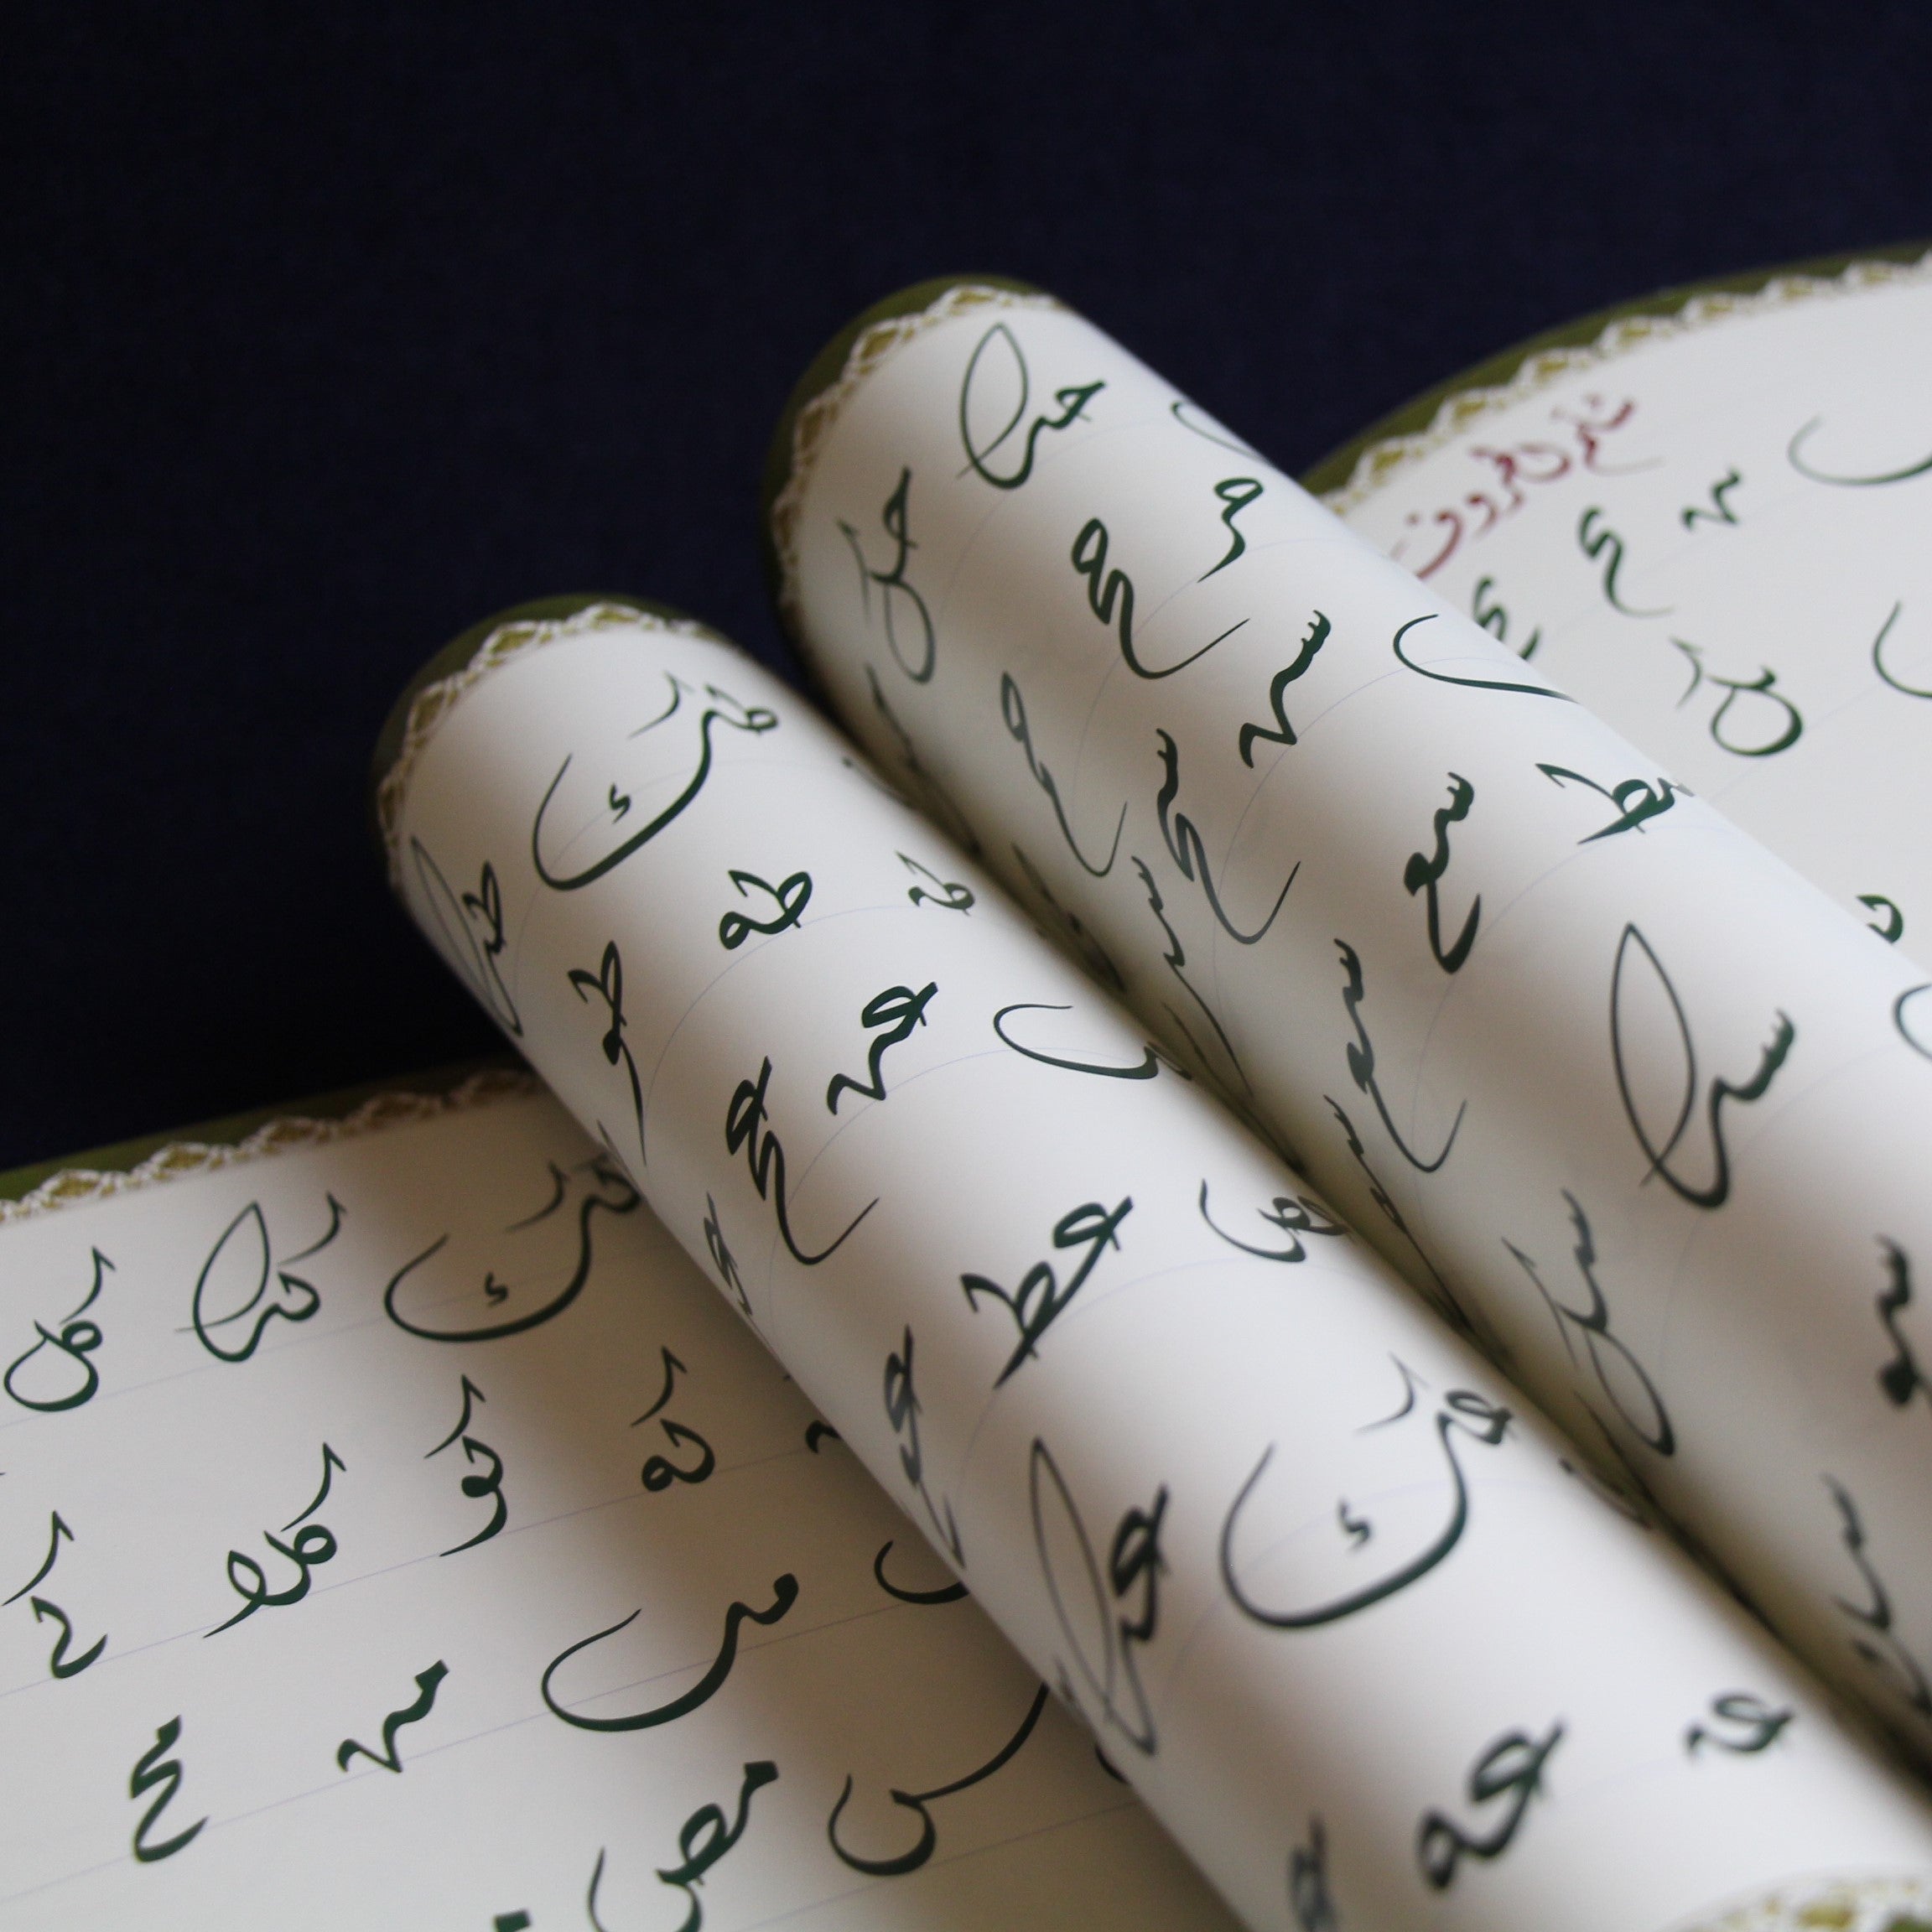 Arabic calligraphy copy book (mashq) for Diwani script based on work of Mukhtar 'Alam